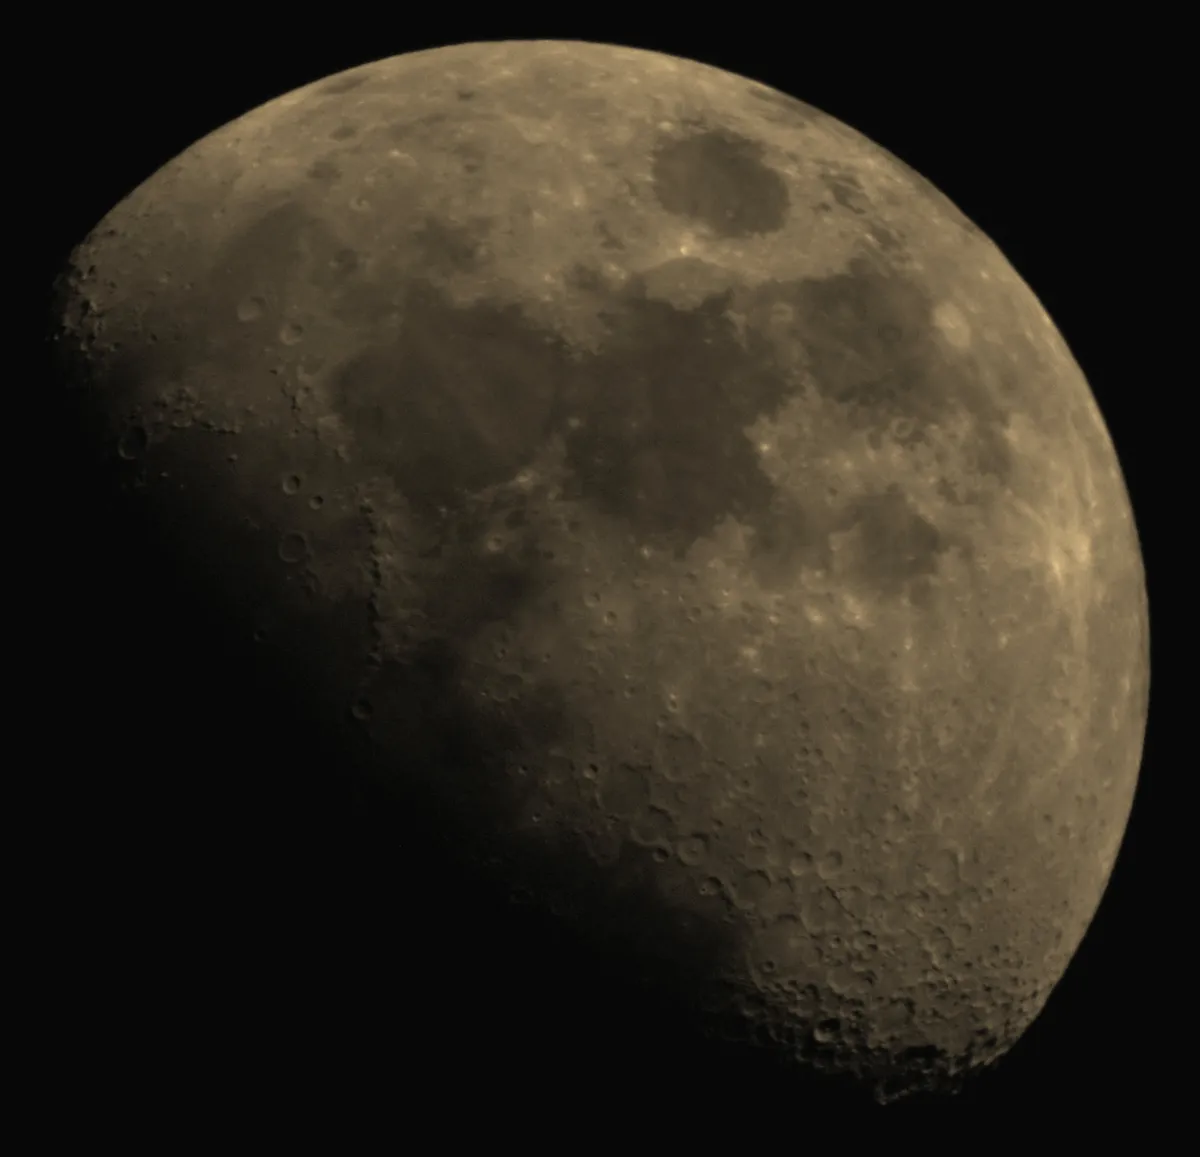 Moon April 27th 2015 by Philip Pugh, Chippenham, Wiltshire, UK. Equipment: Konica Minolta, Skymax 127 Maksutov.